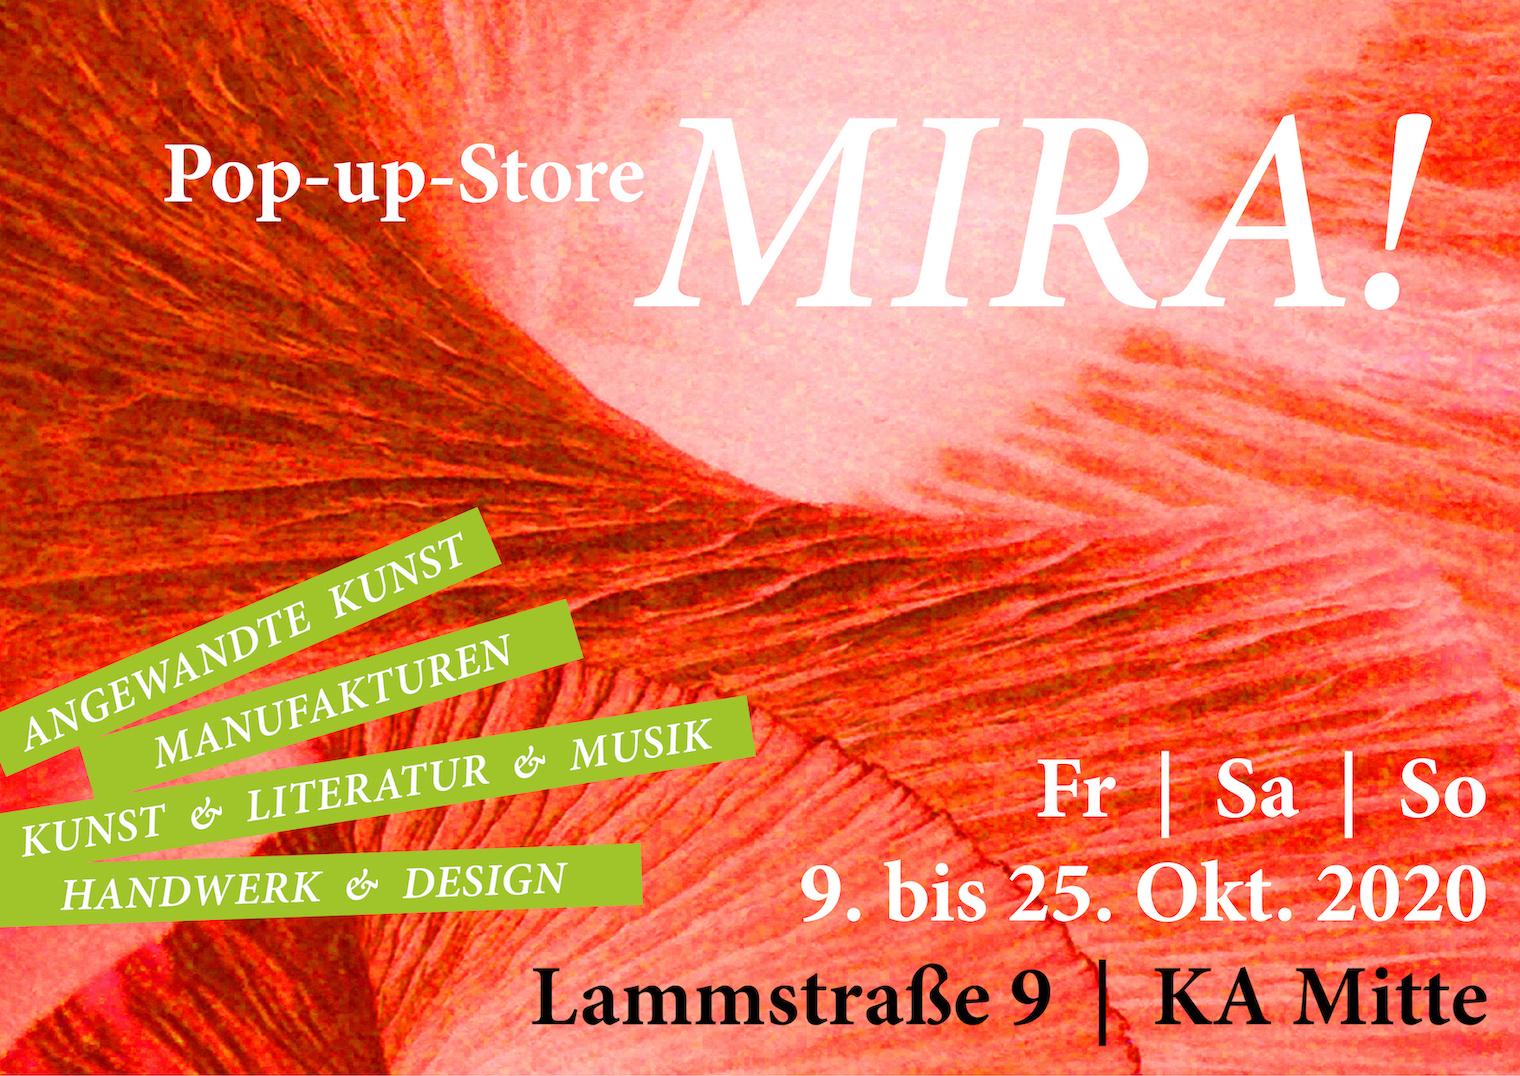 MIRA! Pop-up-Store - 09. bis 25. Oktober 2020